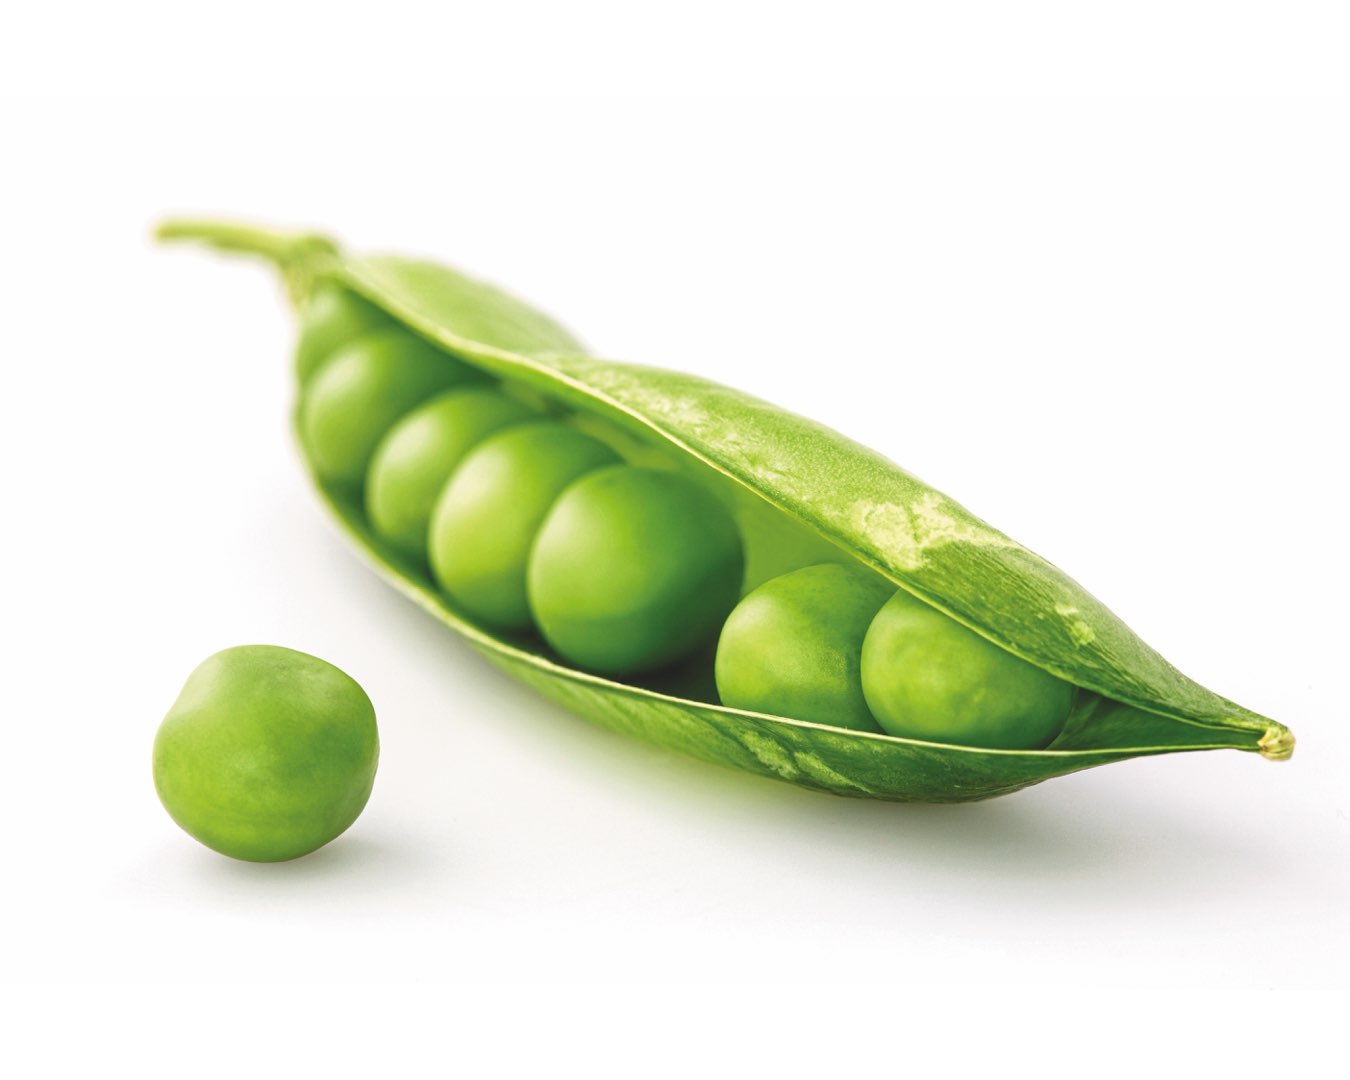 Green peas in a pod